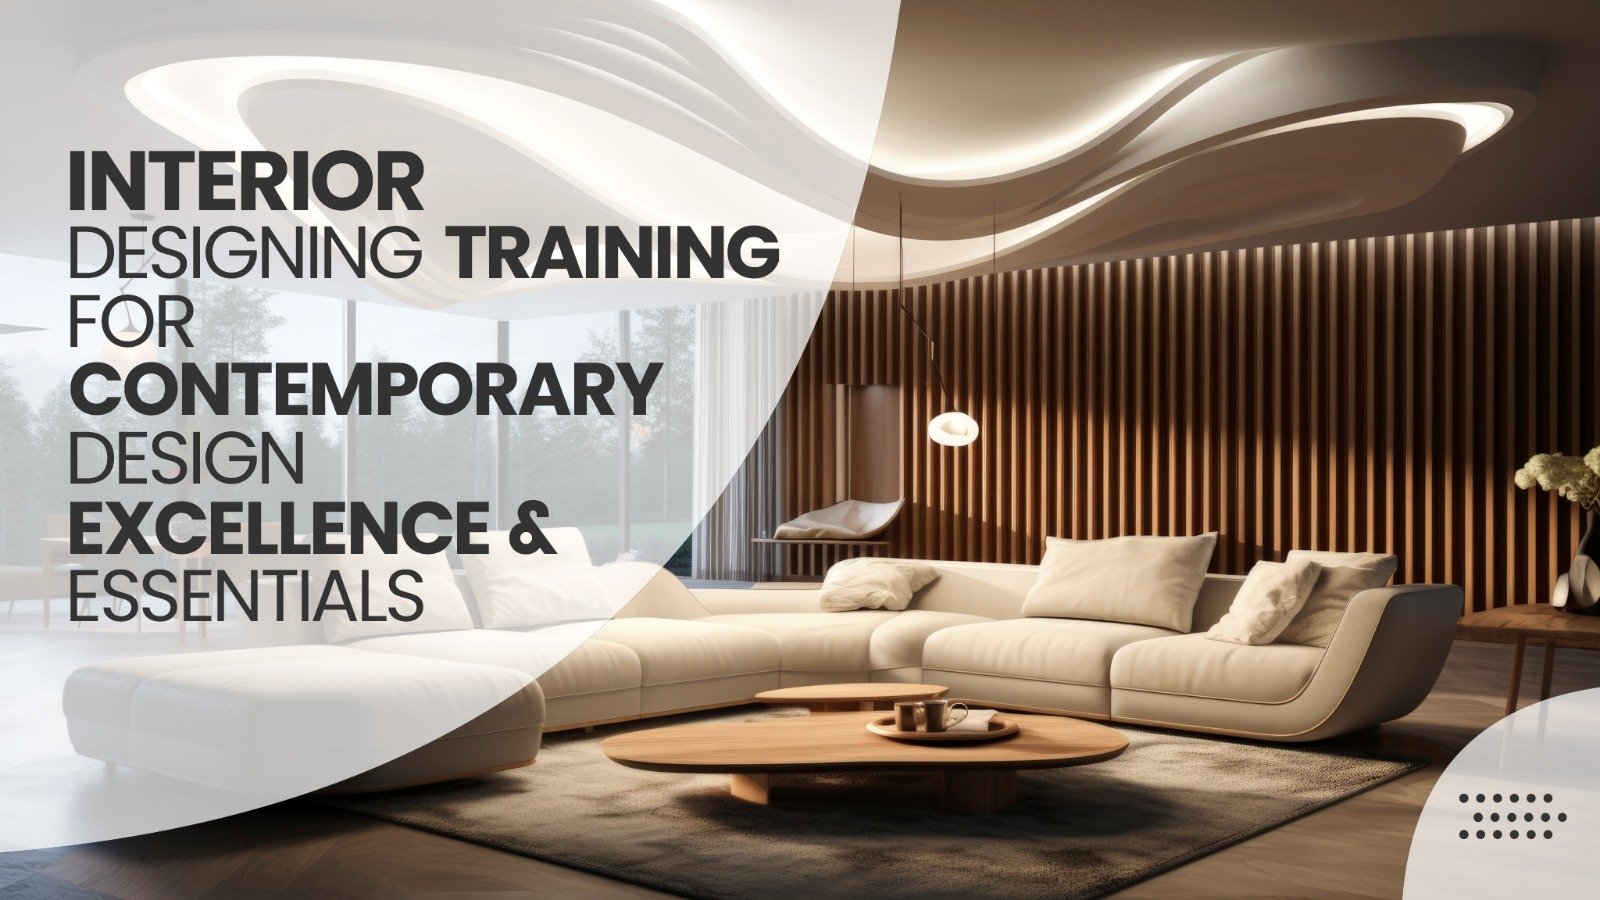 Interior Designing Training for Contemporary Design Excellence and Essentials